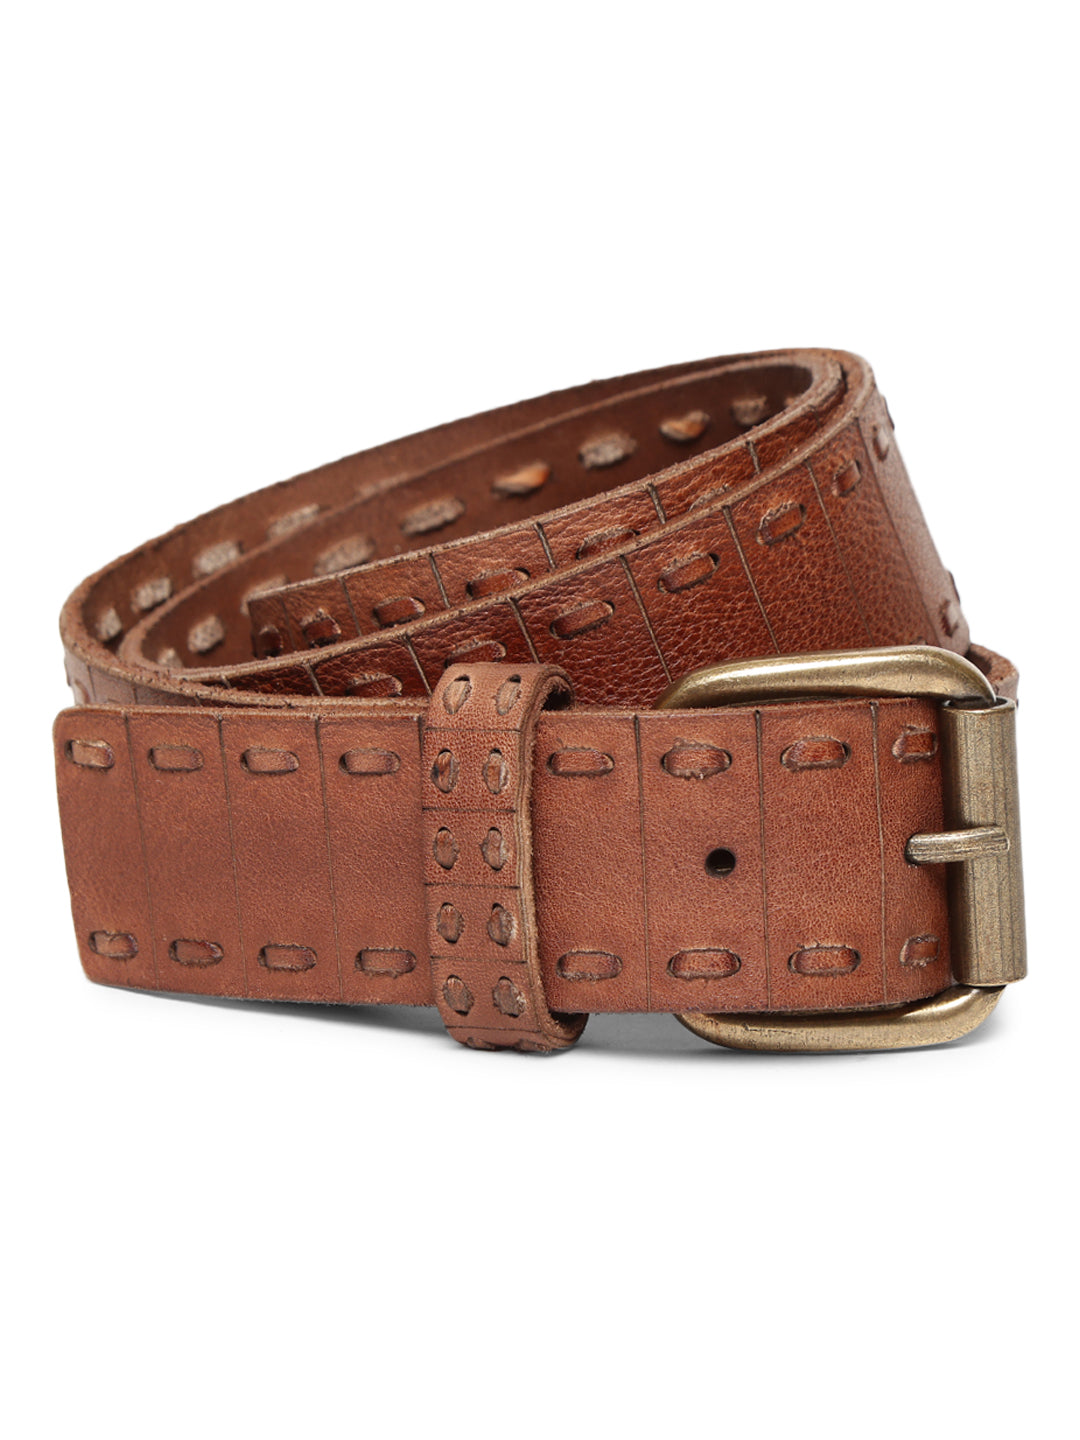 Brown Genuine Leather Interlinked Weaving Technique Belt By Art N Vintage